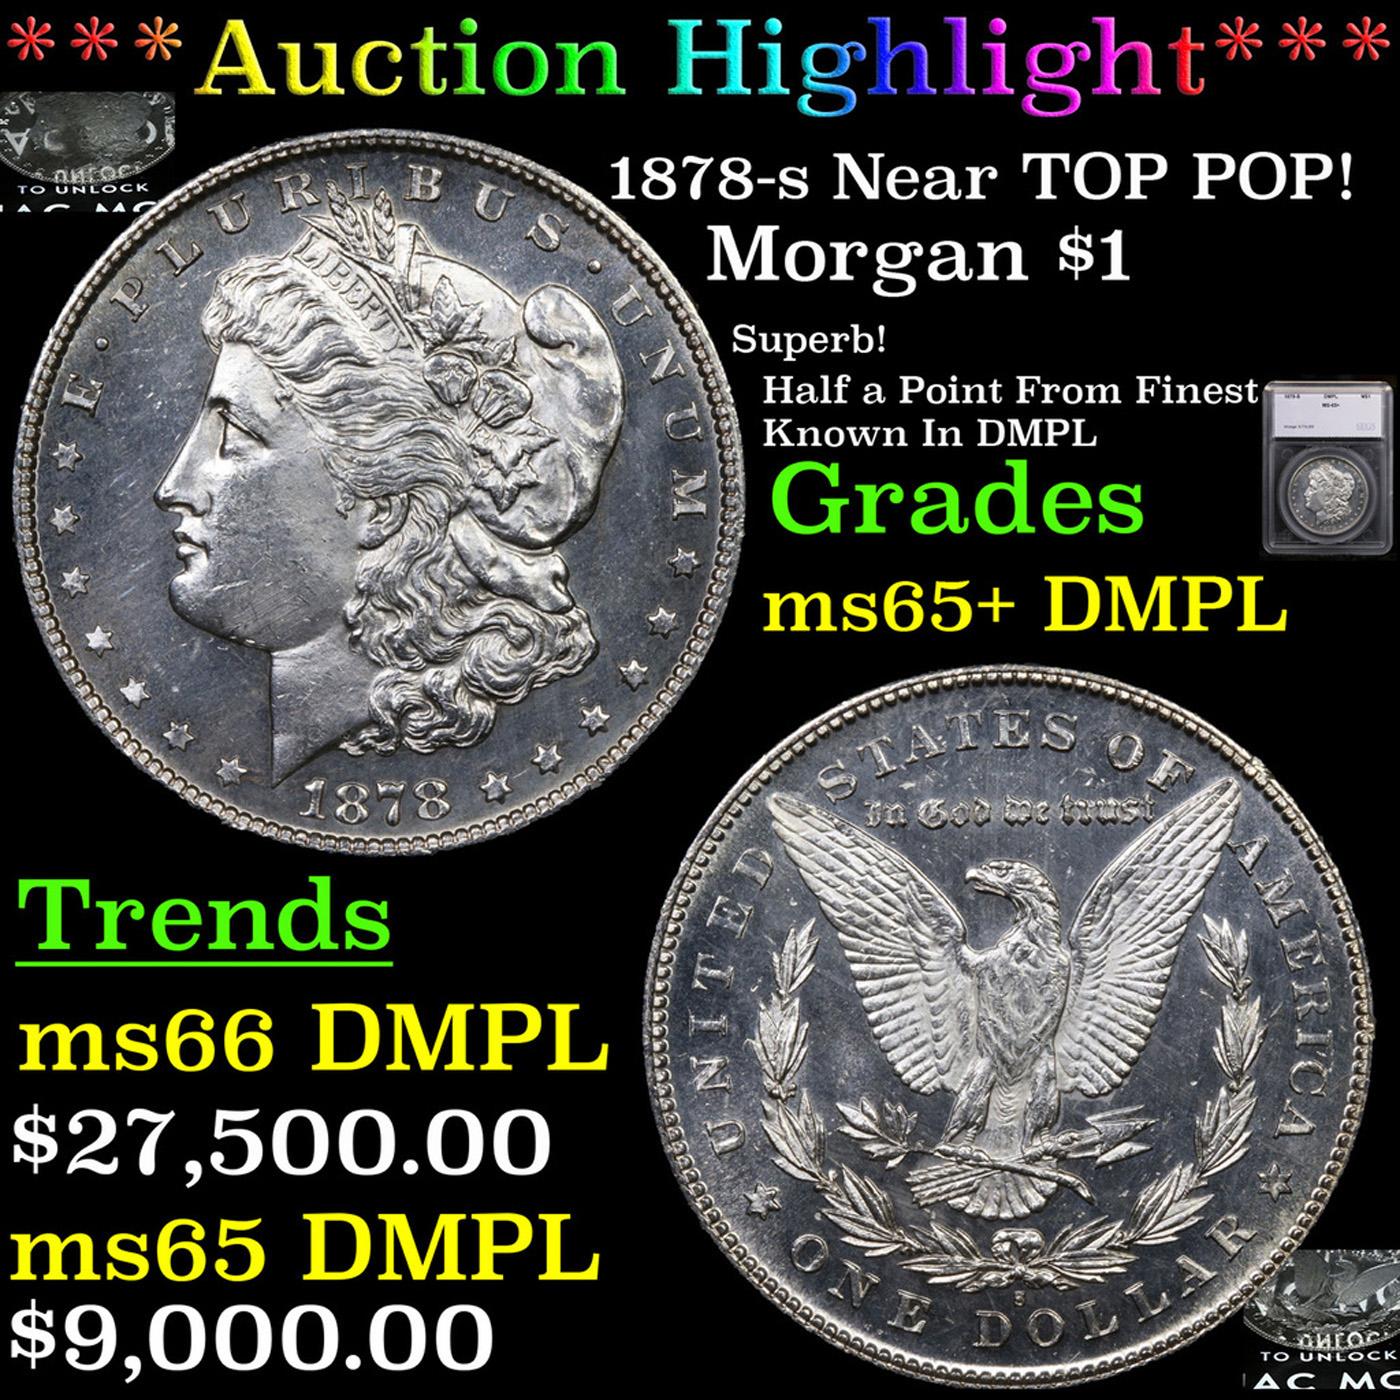 ***Auction Highlight*** 1878-s Morgan Dollar Near TOP POP! $1 Graded ms65+ DMPL By SEGS (fc)